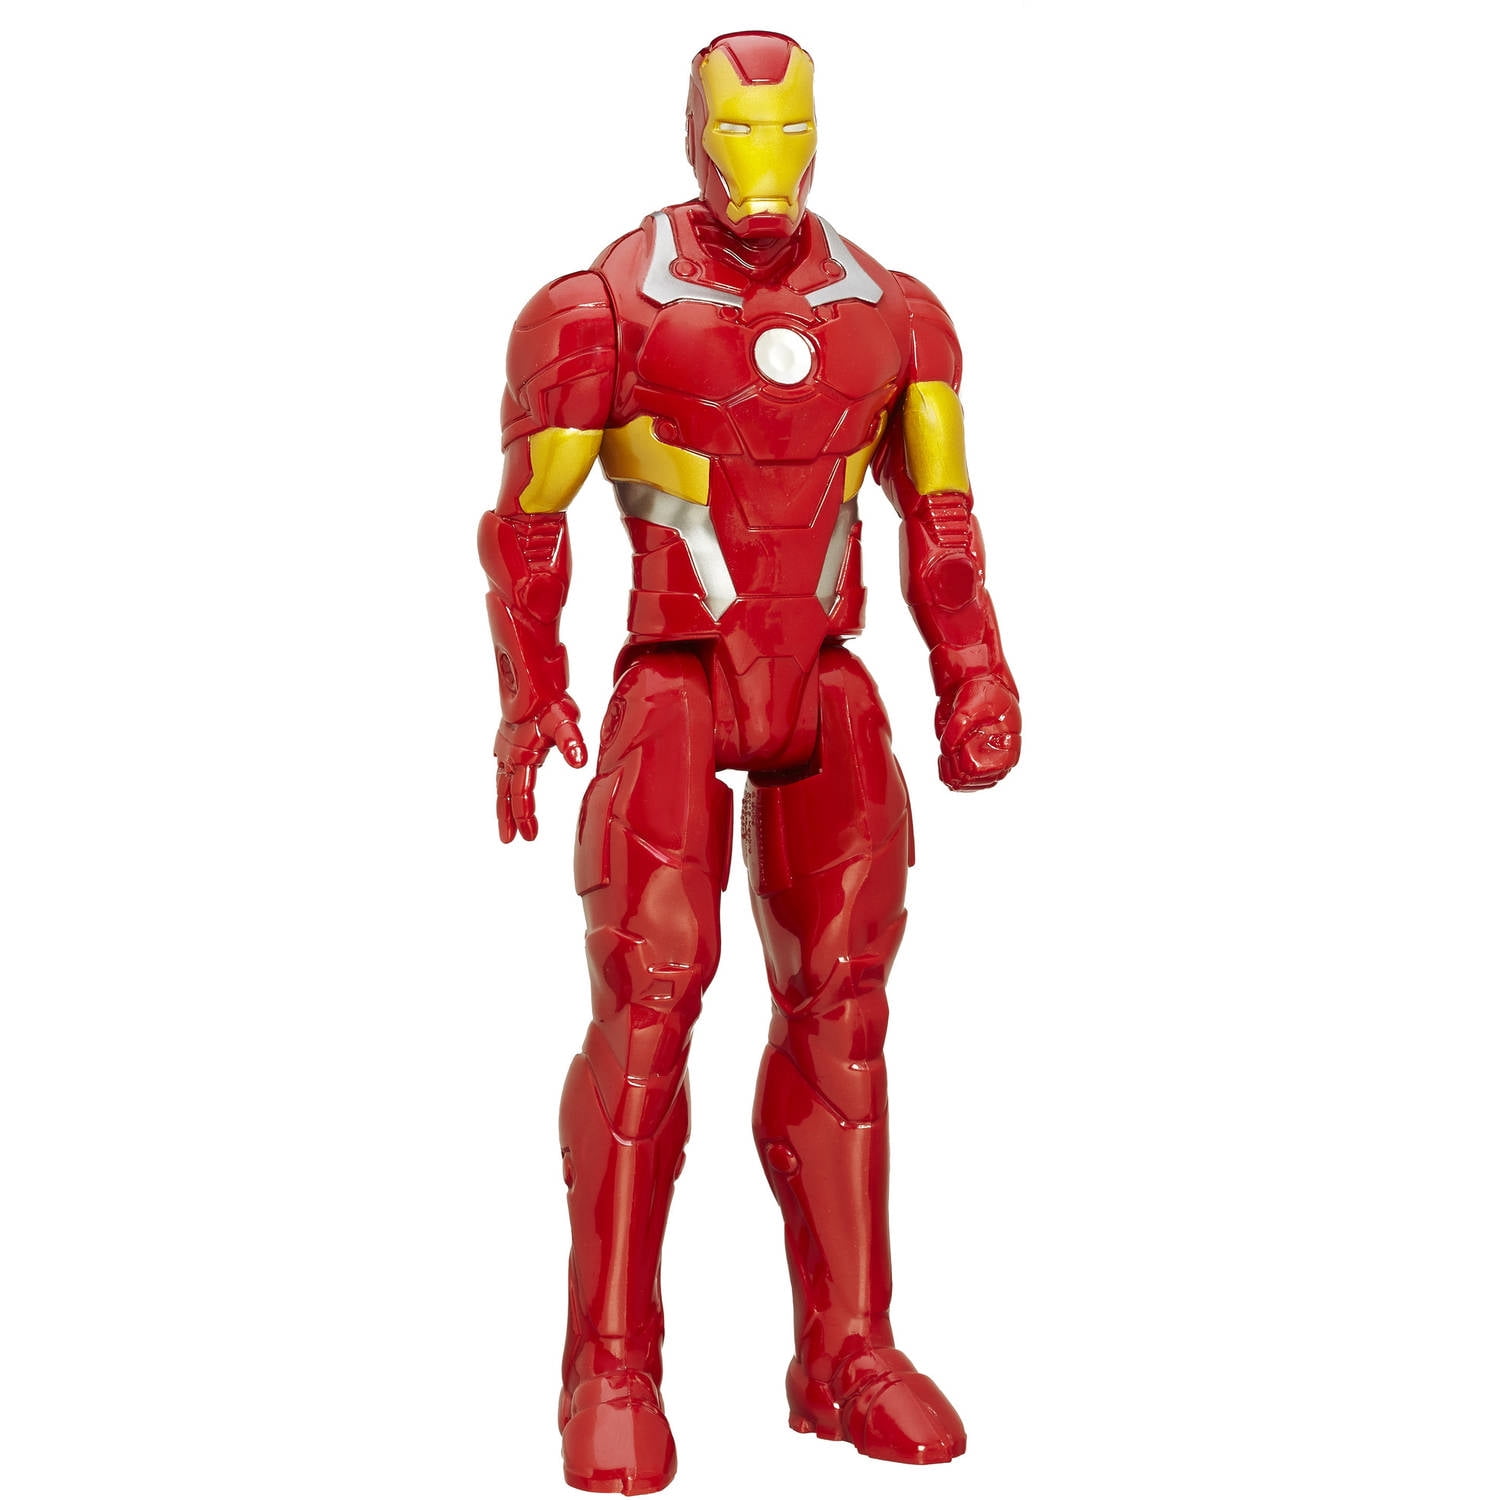 12" Avengers Marvel Titan Hero Series Iron Man Action Figure Kids Collection Toy 